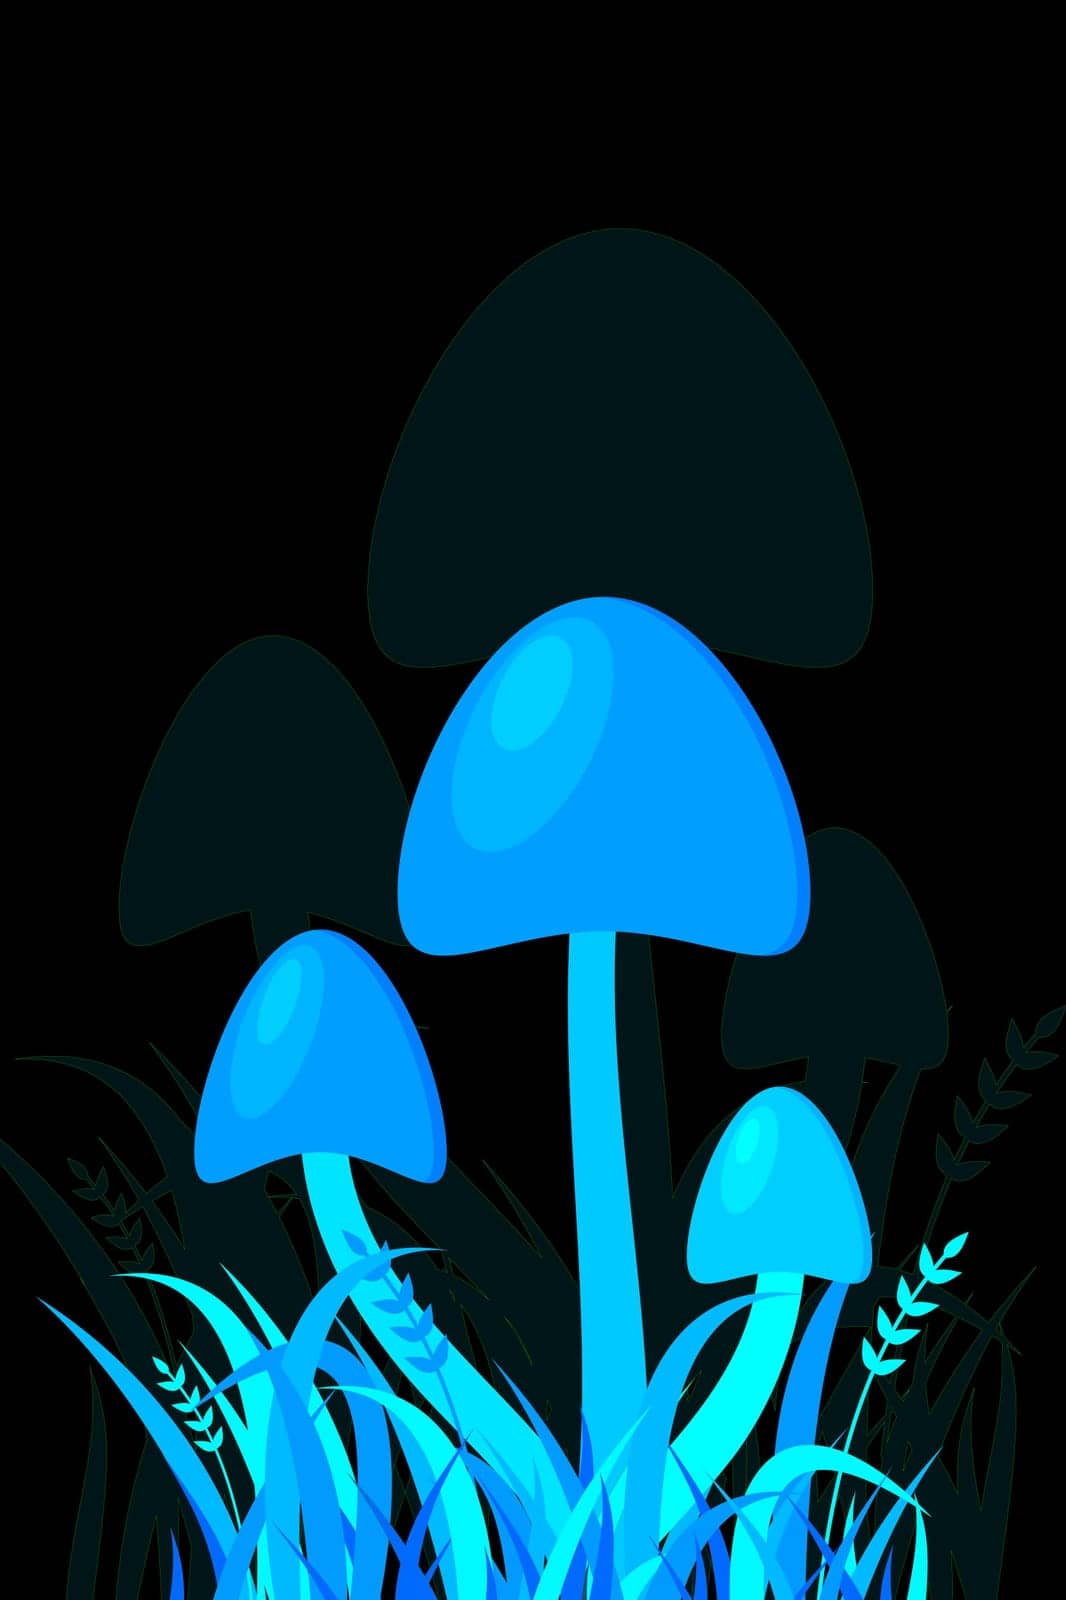 Magic mushrooms isolated. Mushroom with grass. Vector illustration